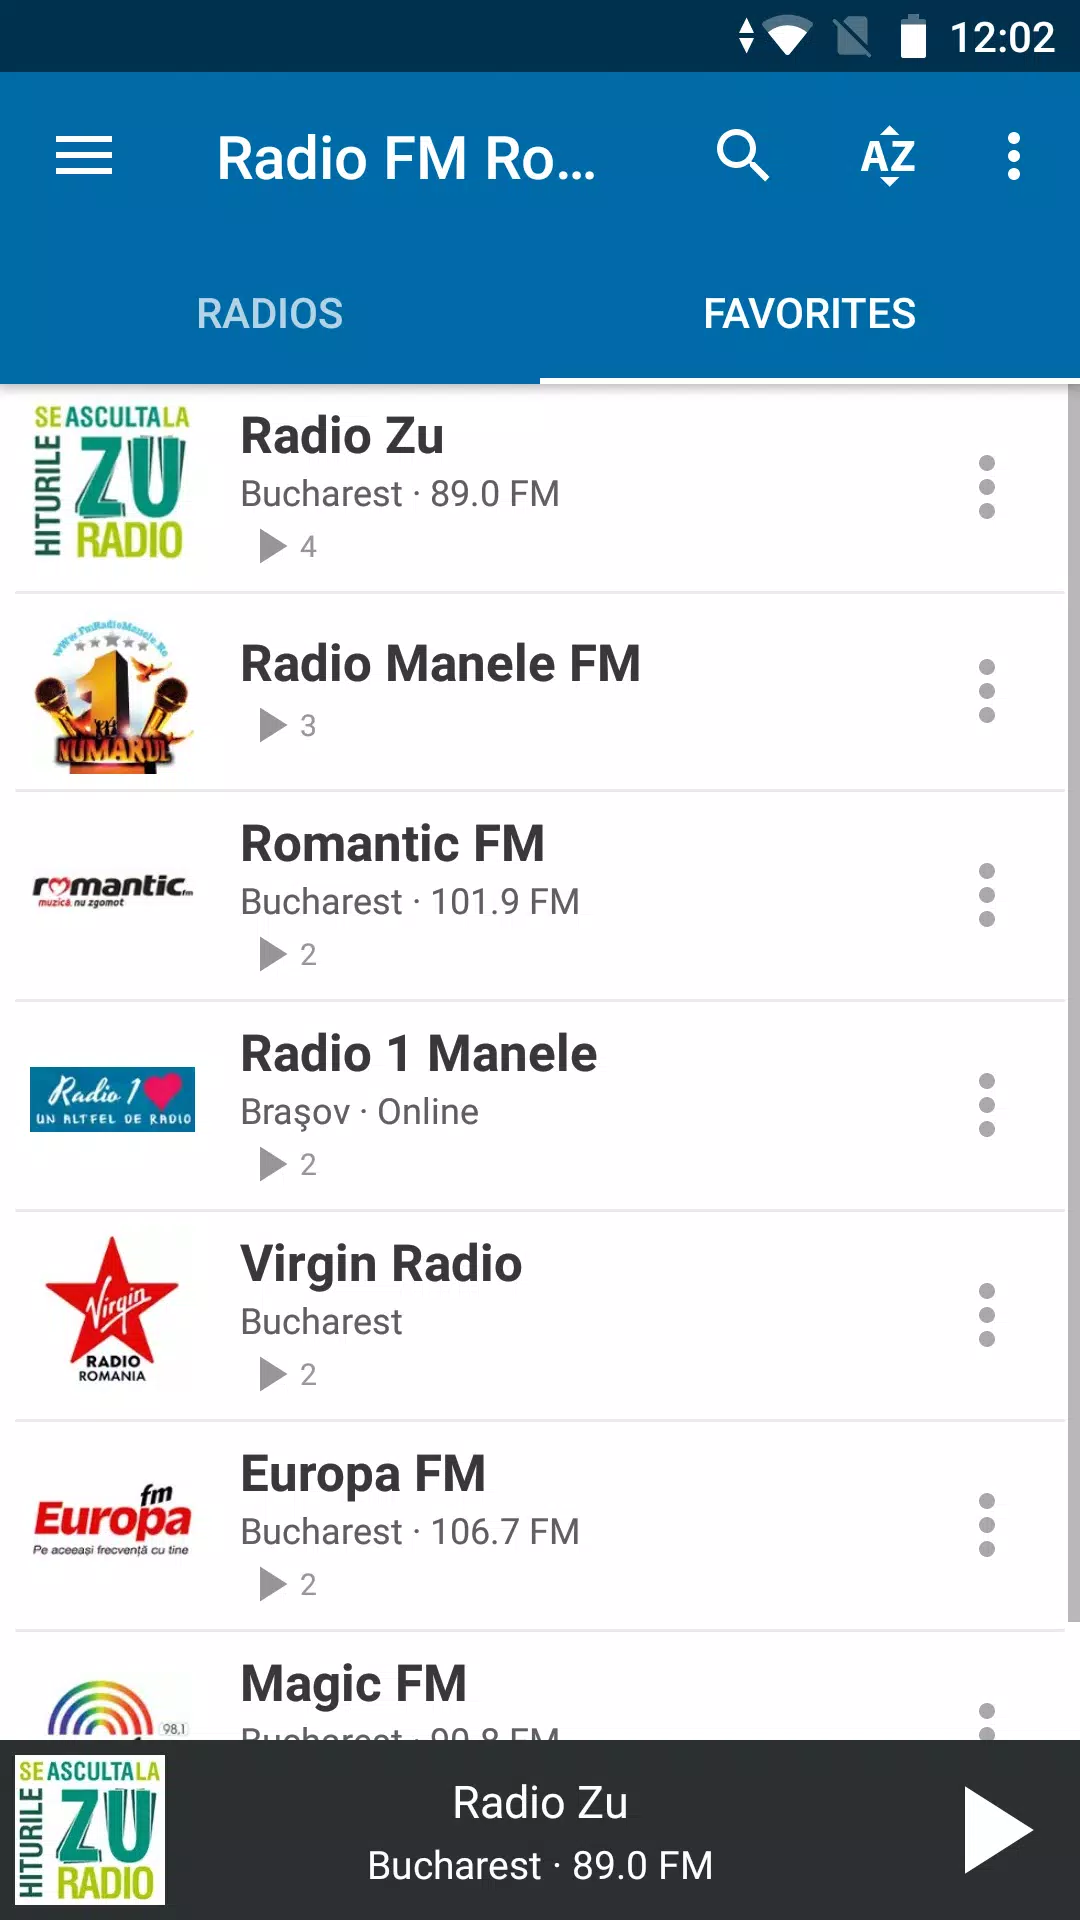 Radio FM Romania for Android - APK Download